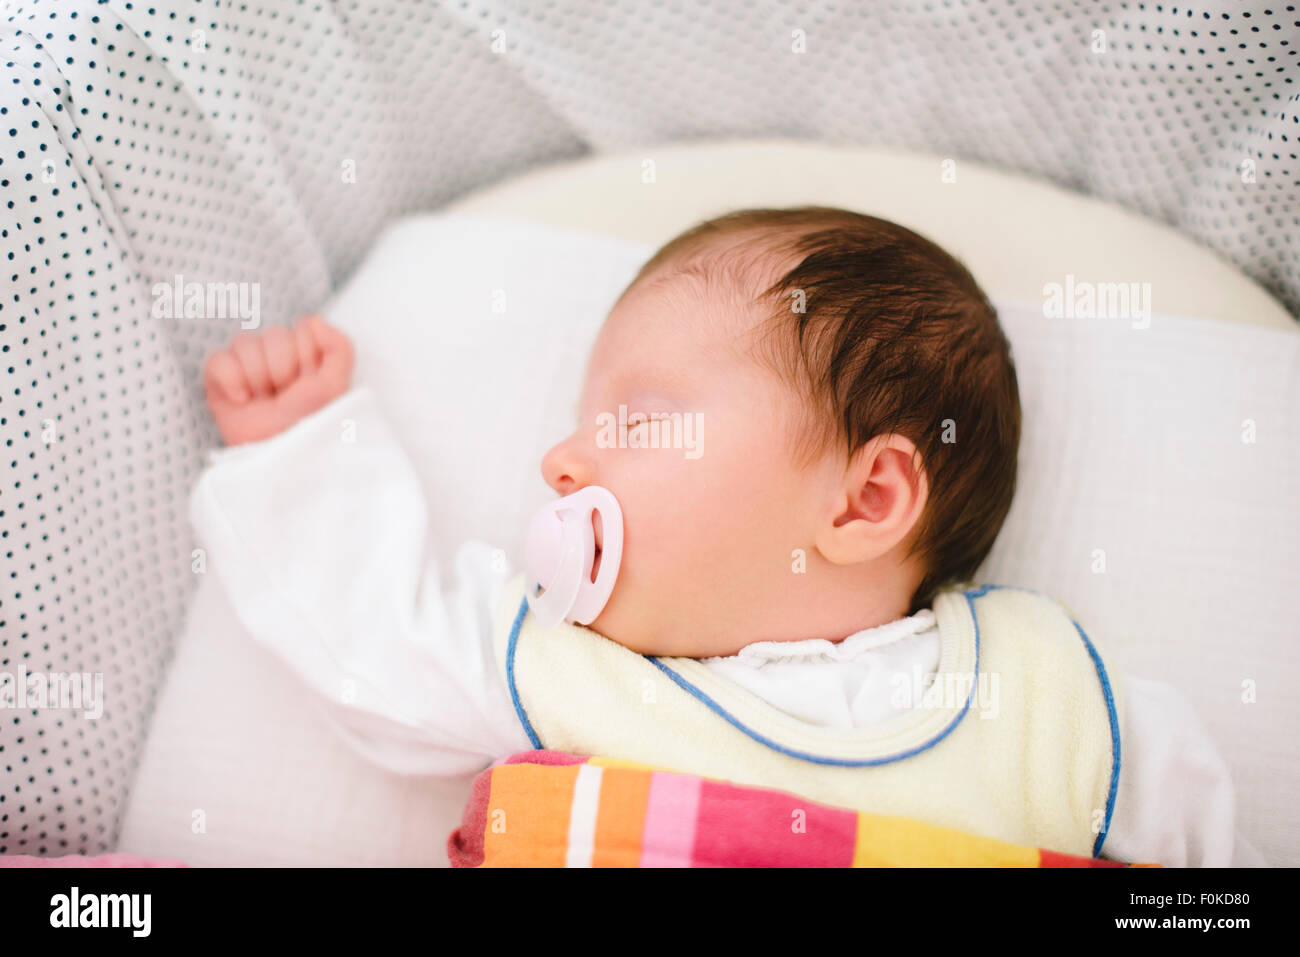 Sleeping newborn baby girl with pacifier Stock Photo